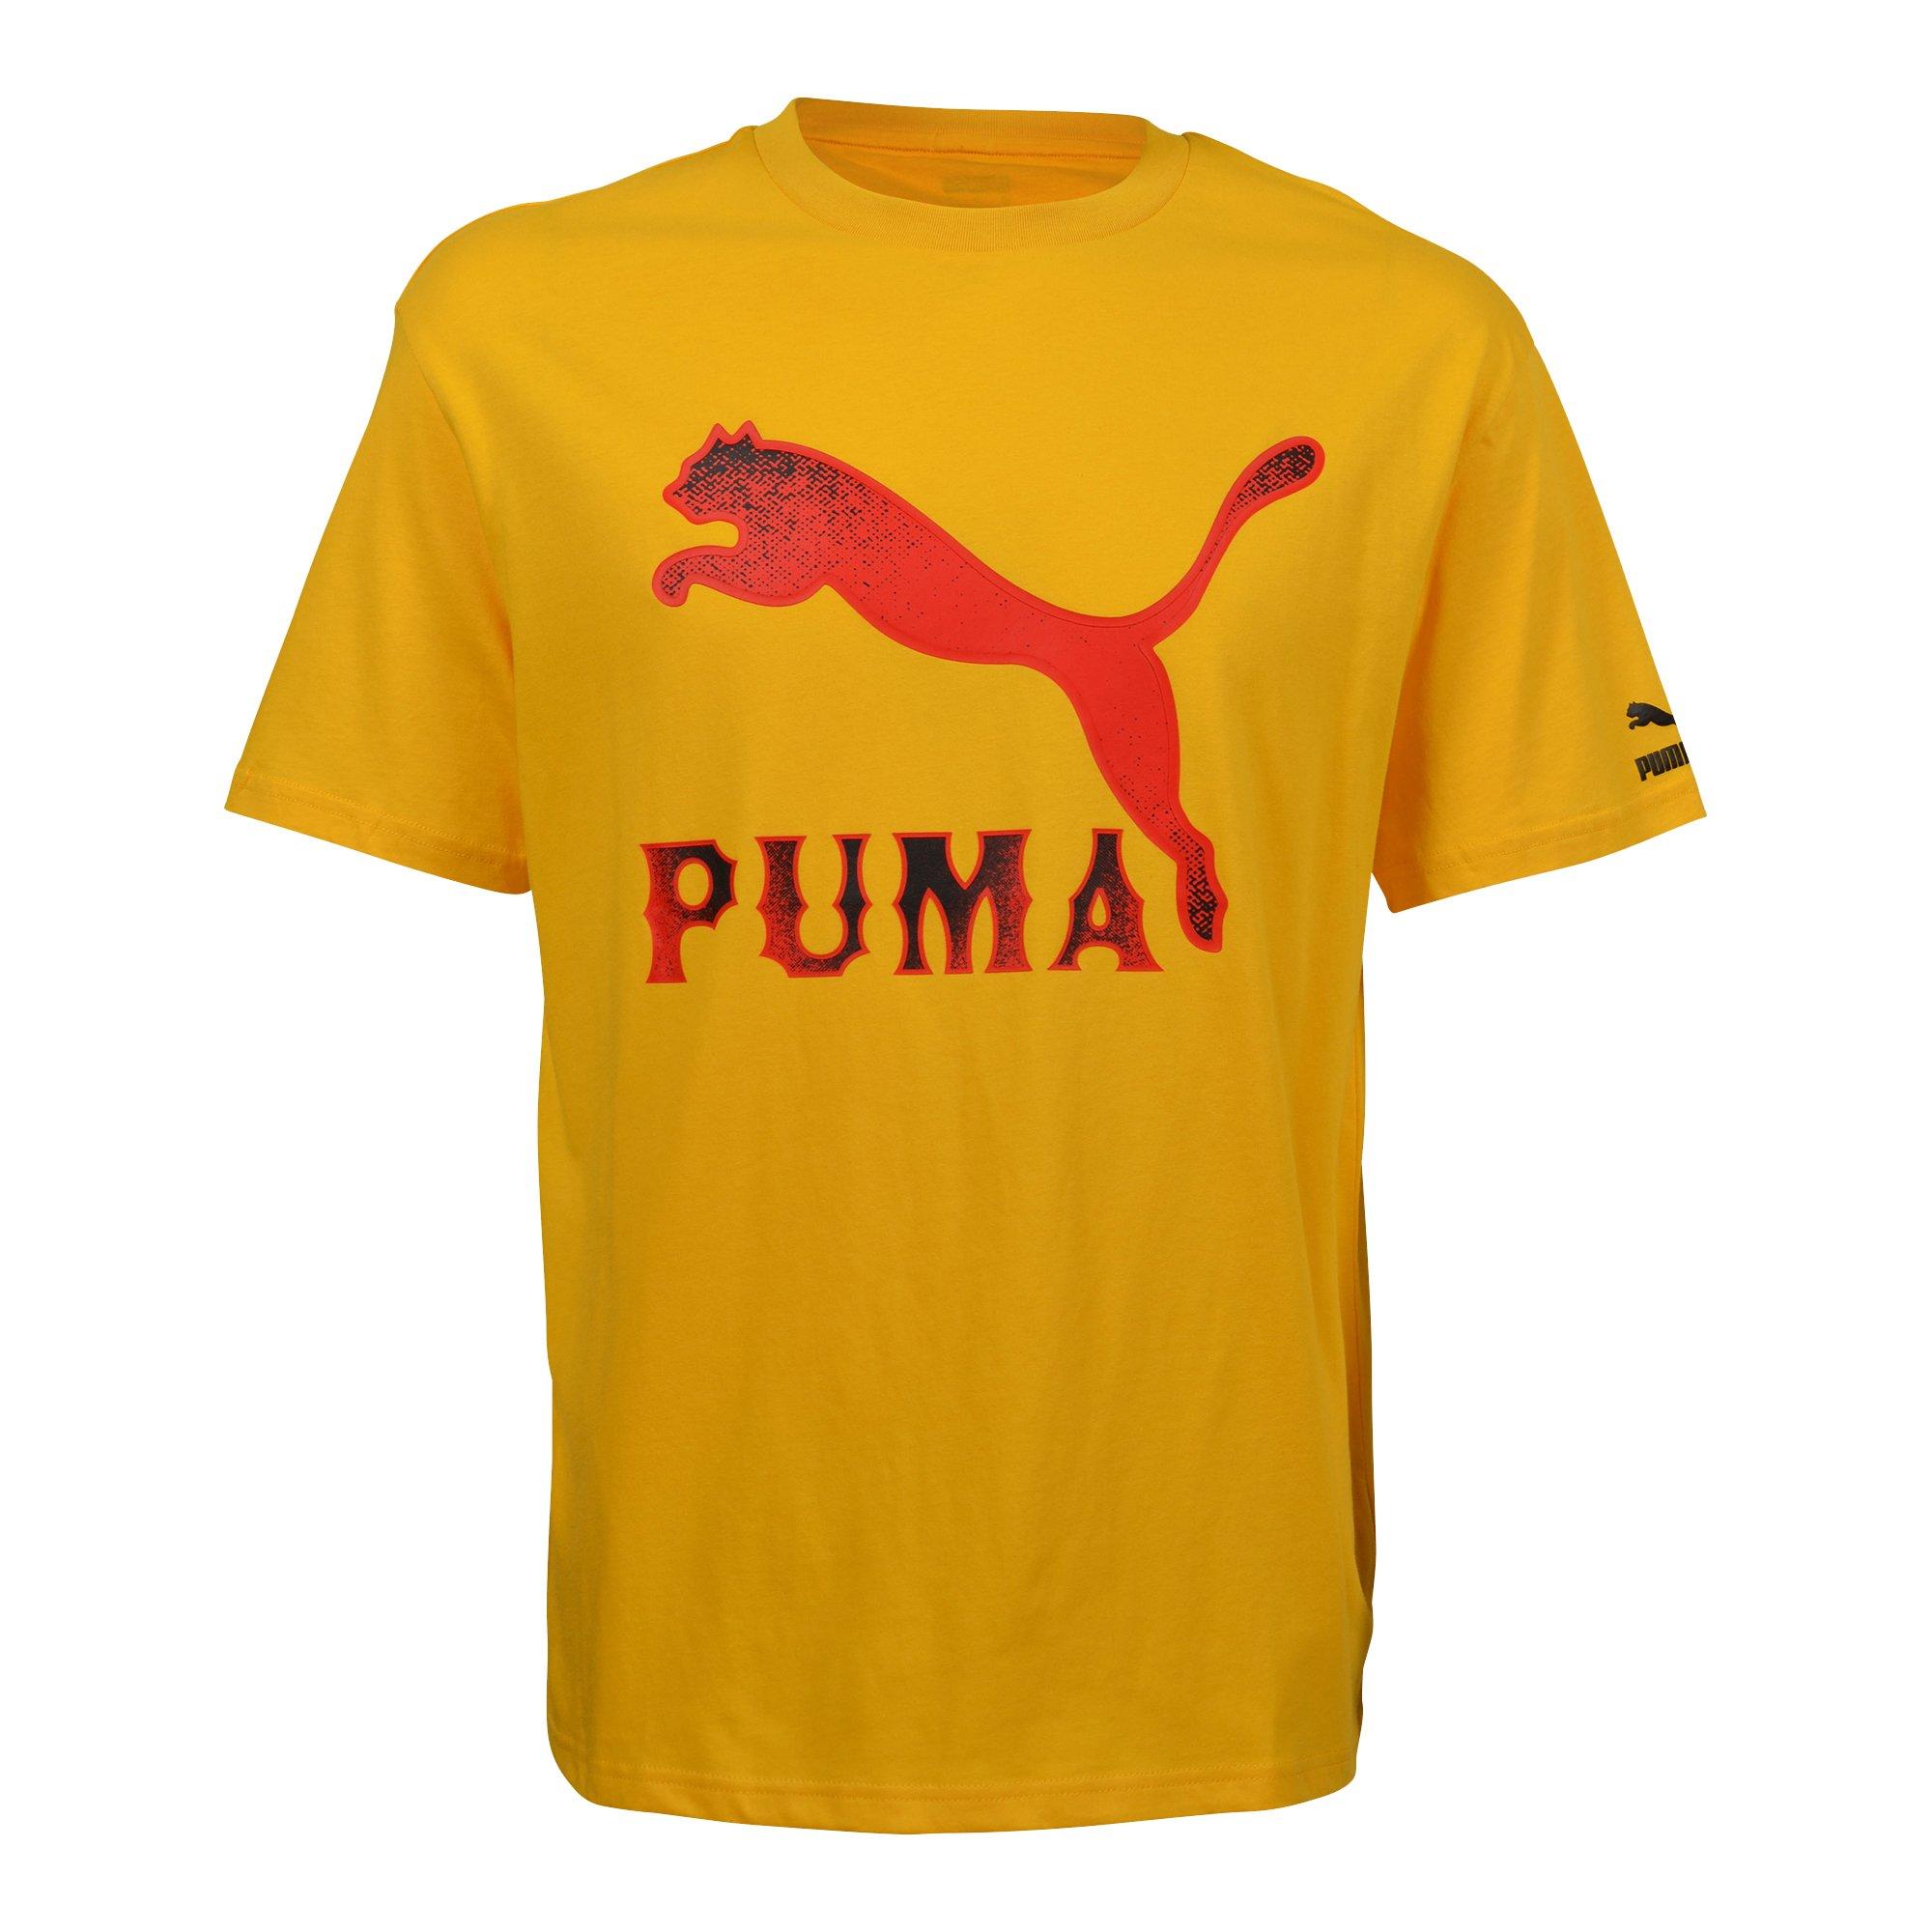 Puma Men's Flame Pants - Hibbett